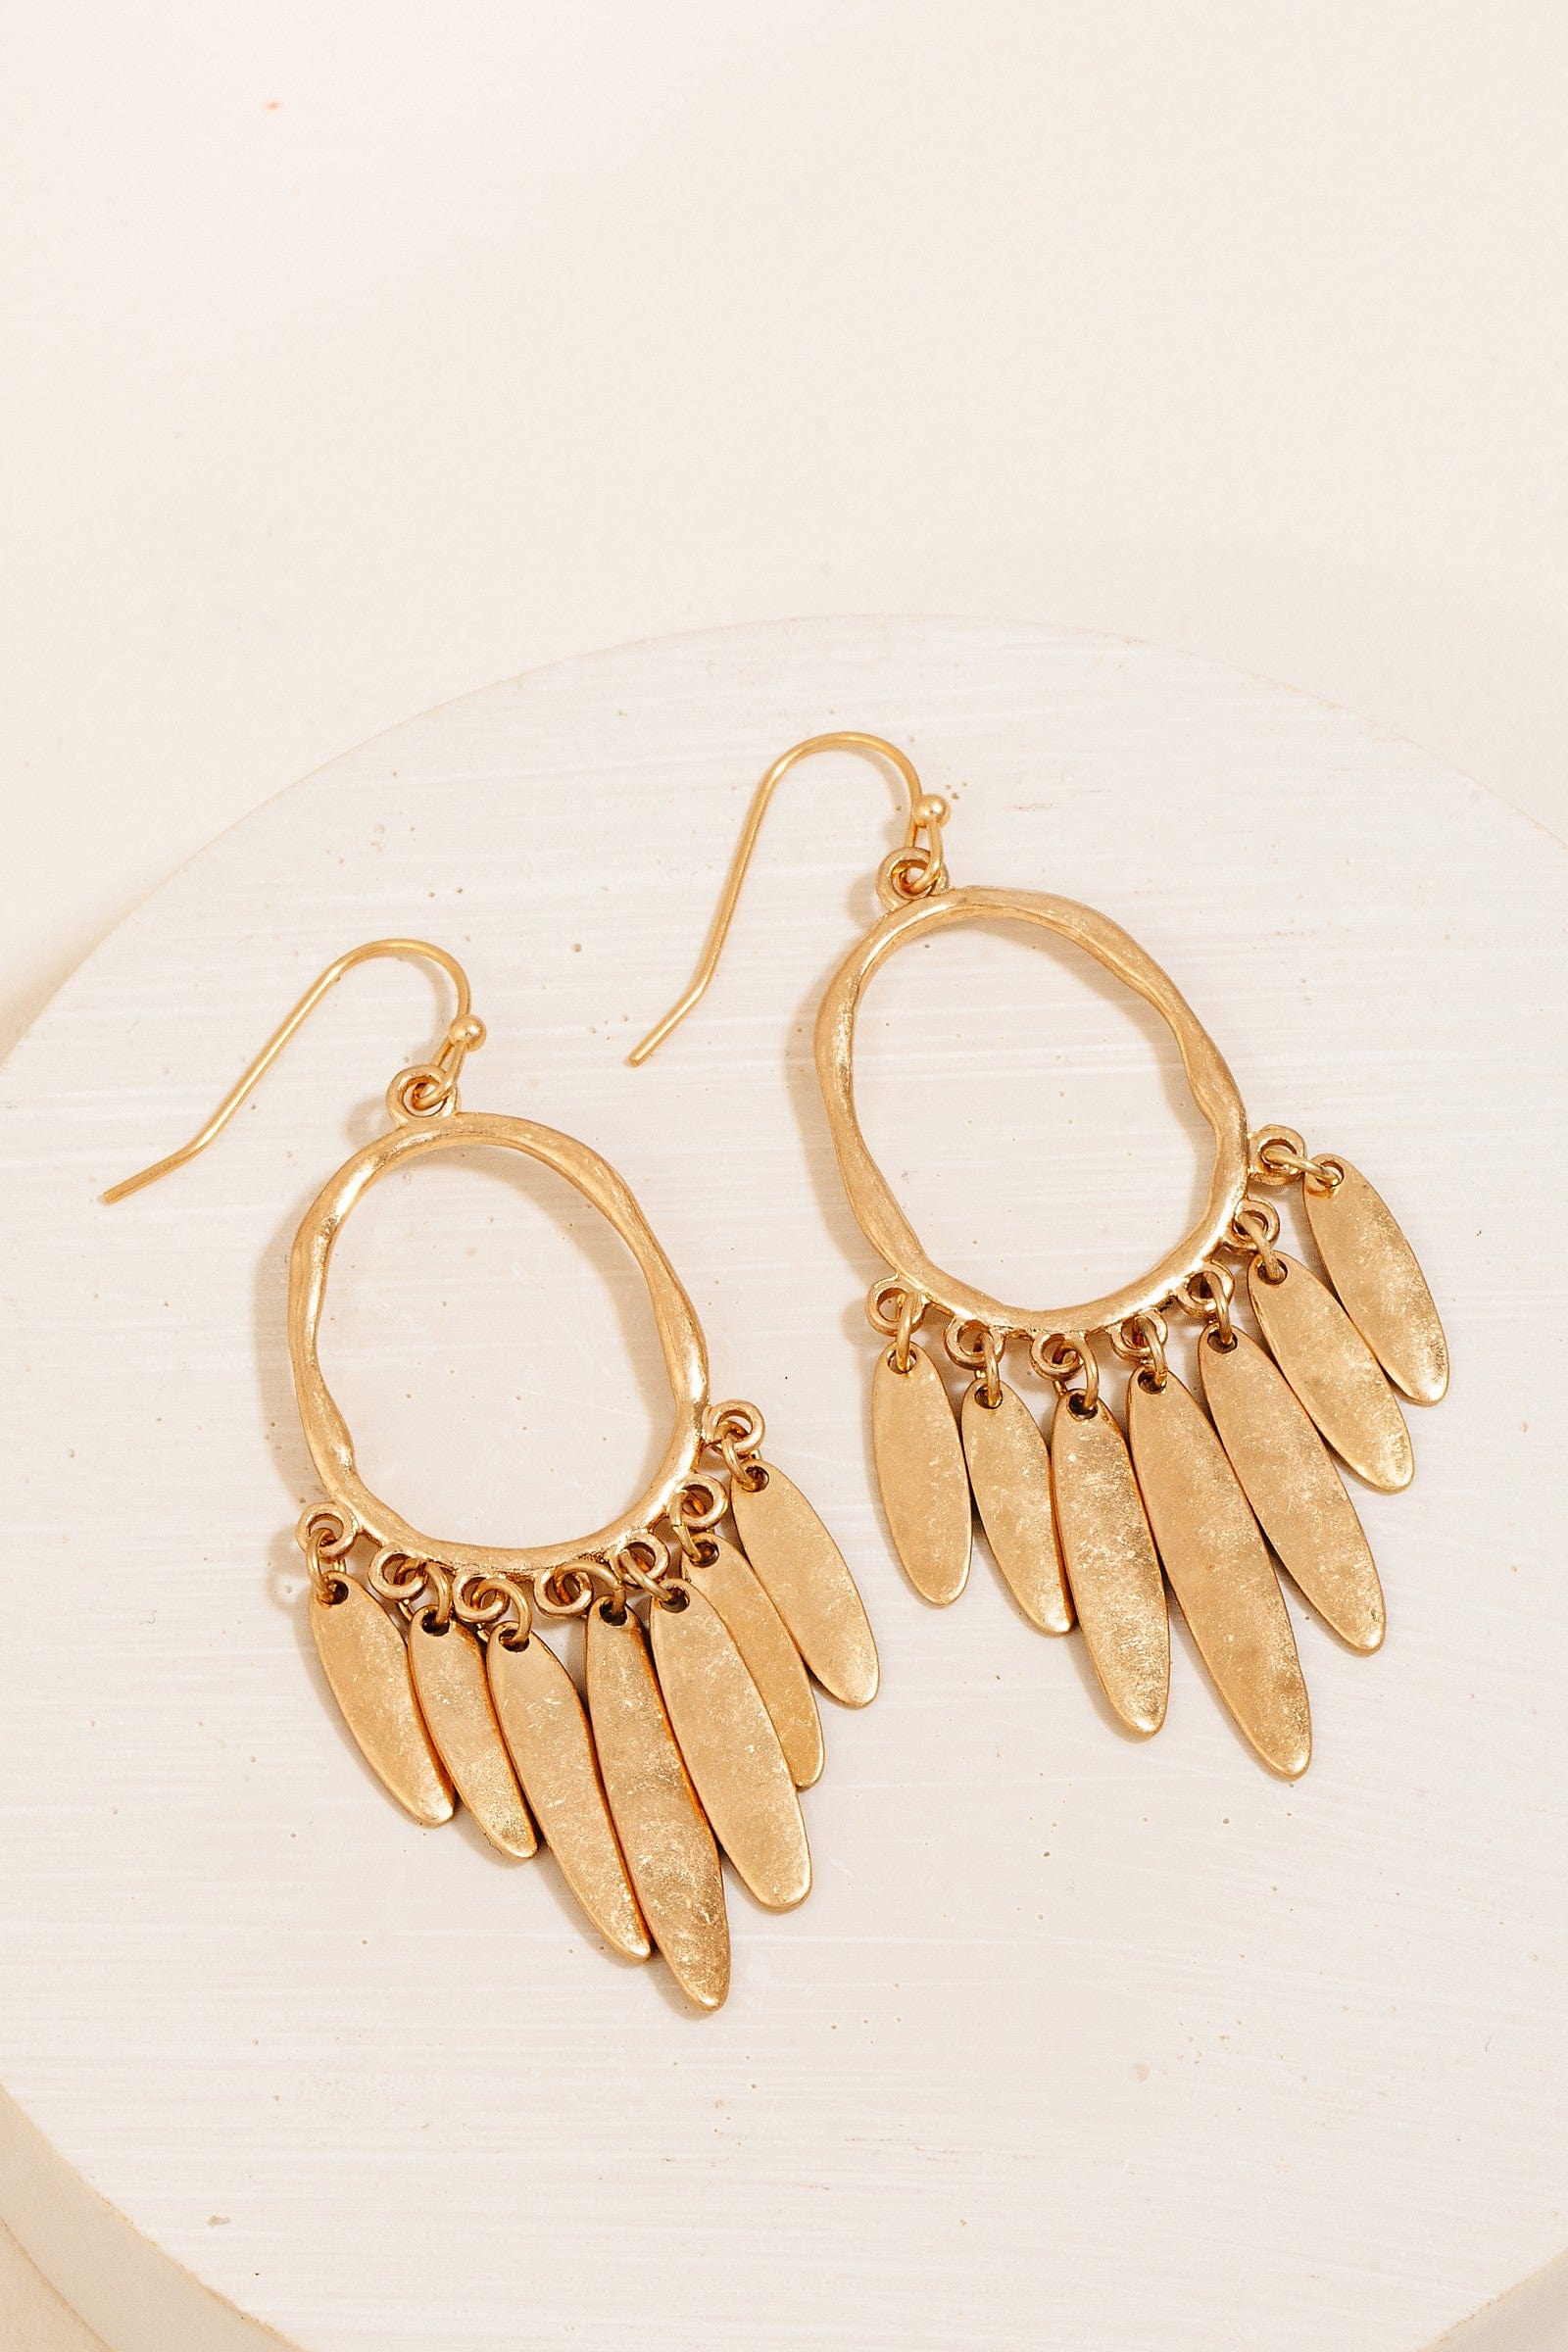 fame accessories Jewelry - Earrings Metallic Hammered Fringe Hoop Drop Earrings In Gold